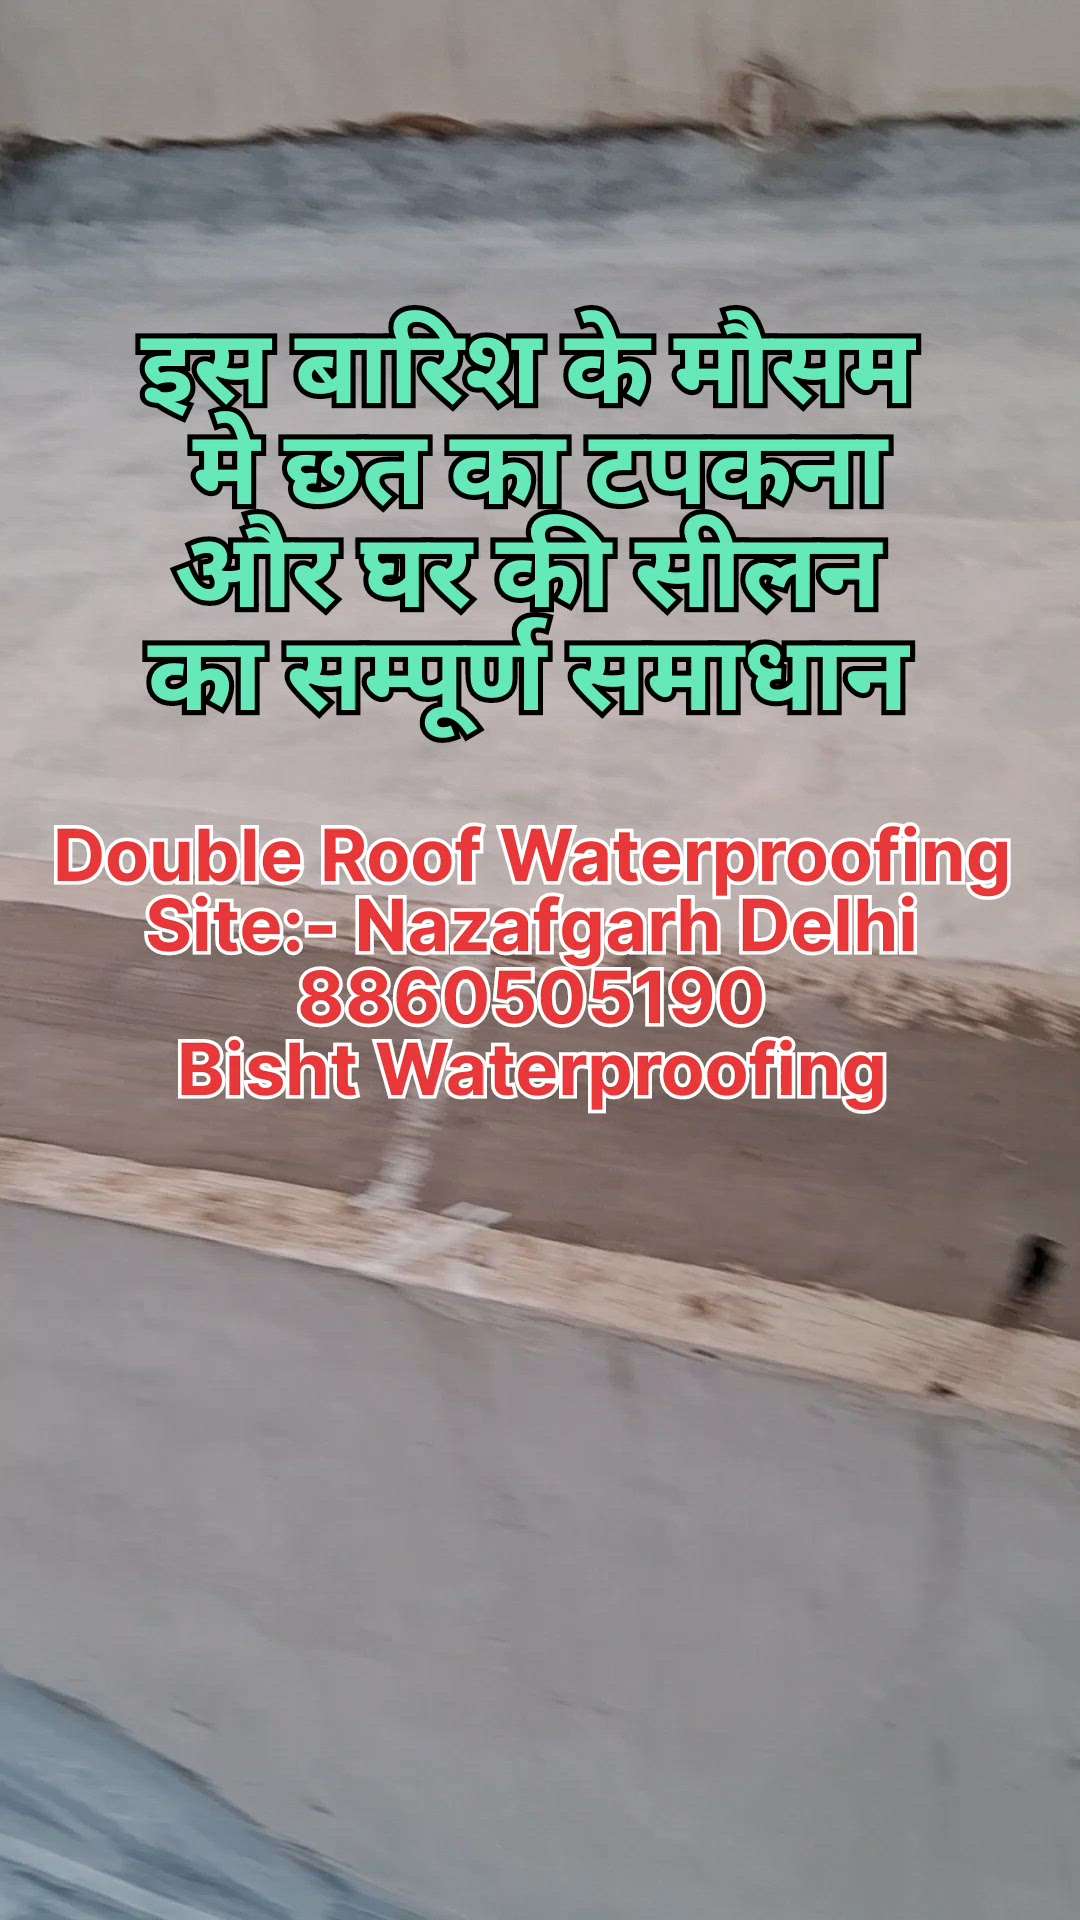 #waterproofing #construction #delhincr #uttrakhand #Haryana